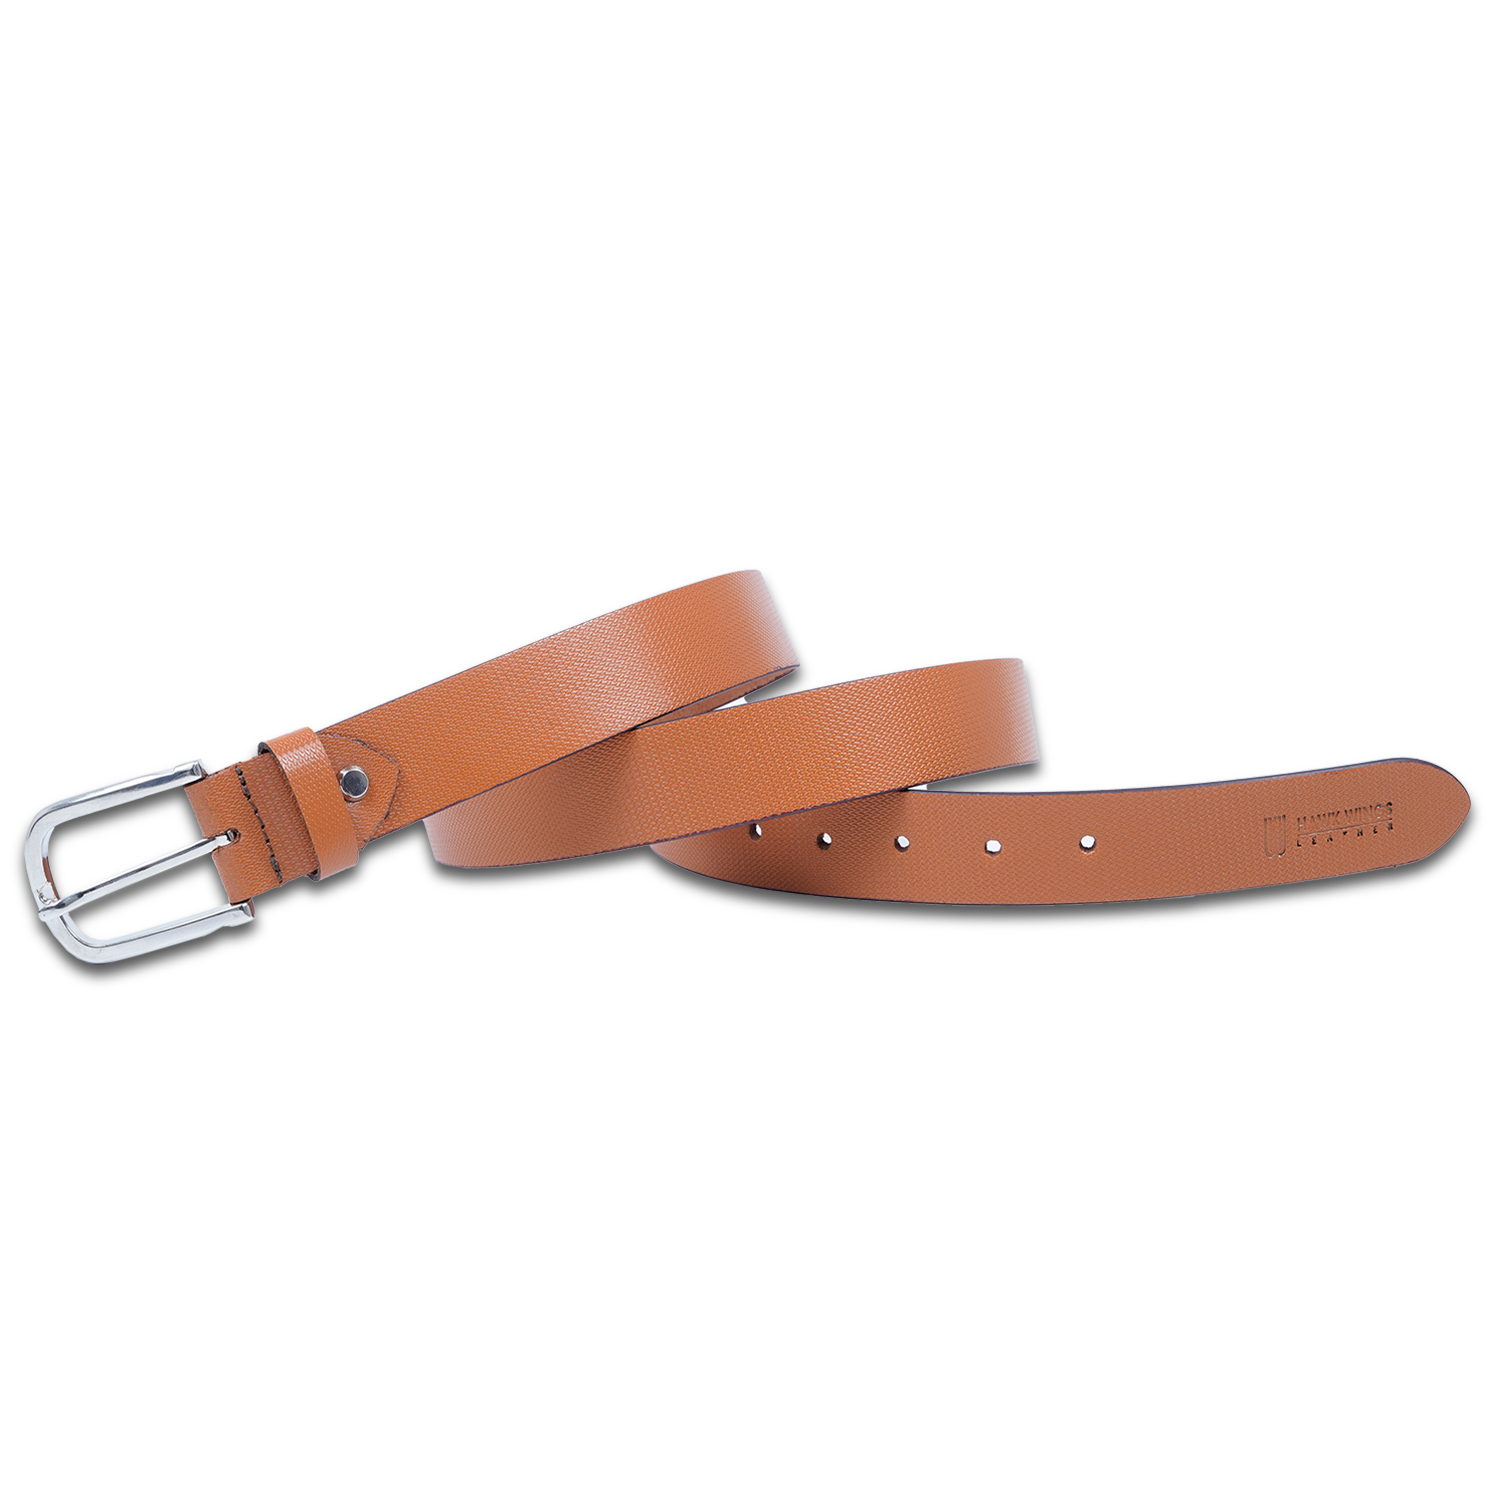 Leather Belt Wallet Combo For Men (Tan-Brown)